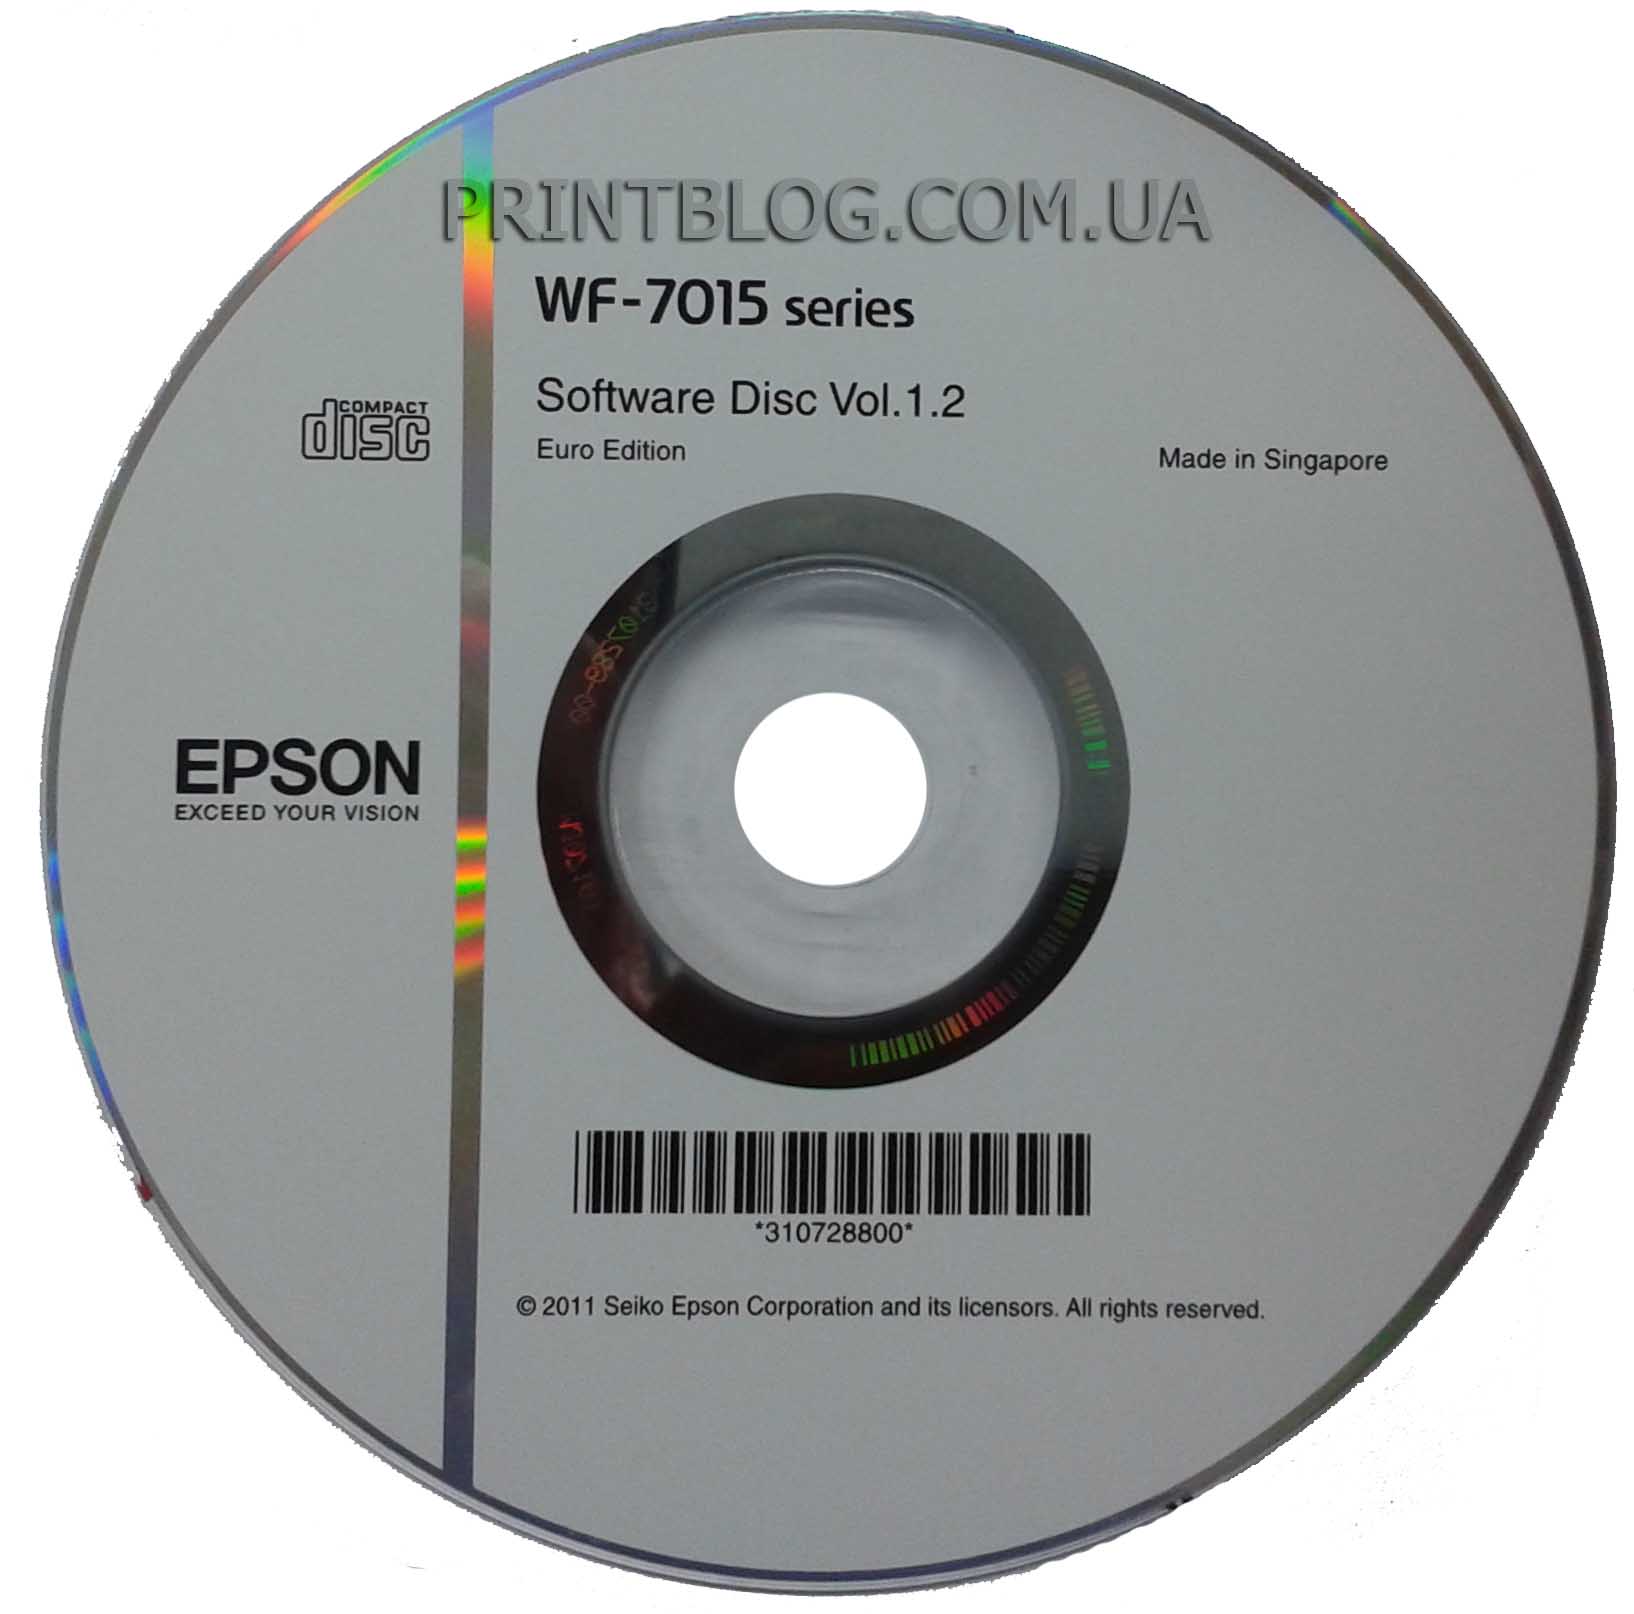 Диск с драйверами Epson WF 7015